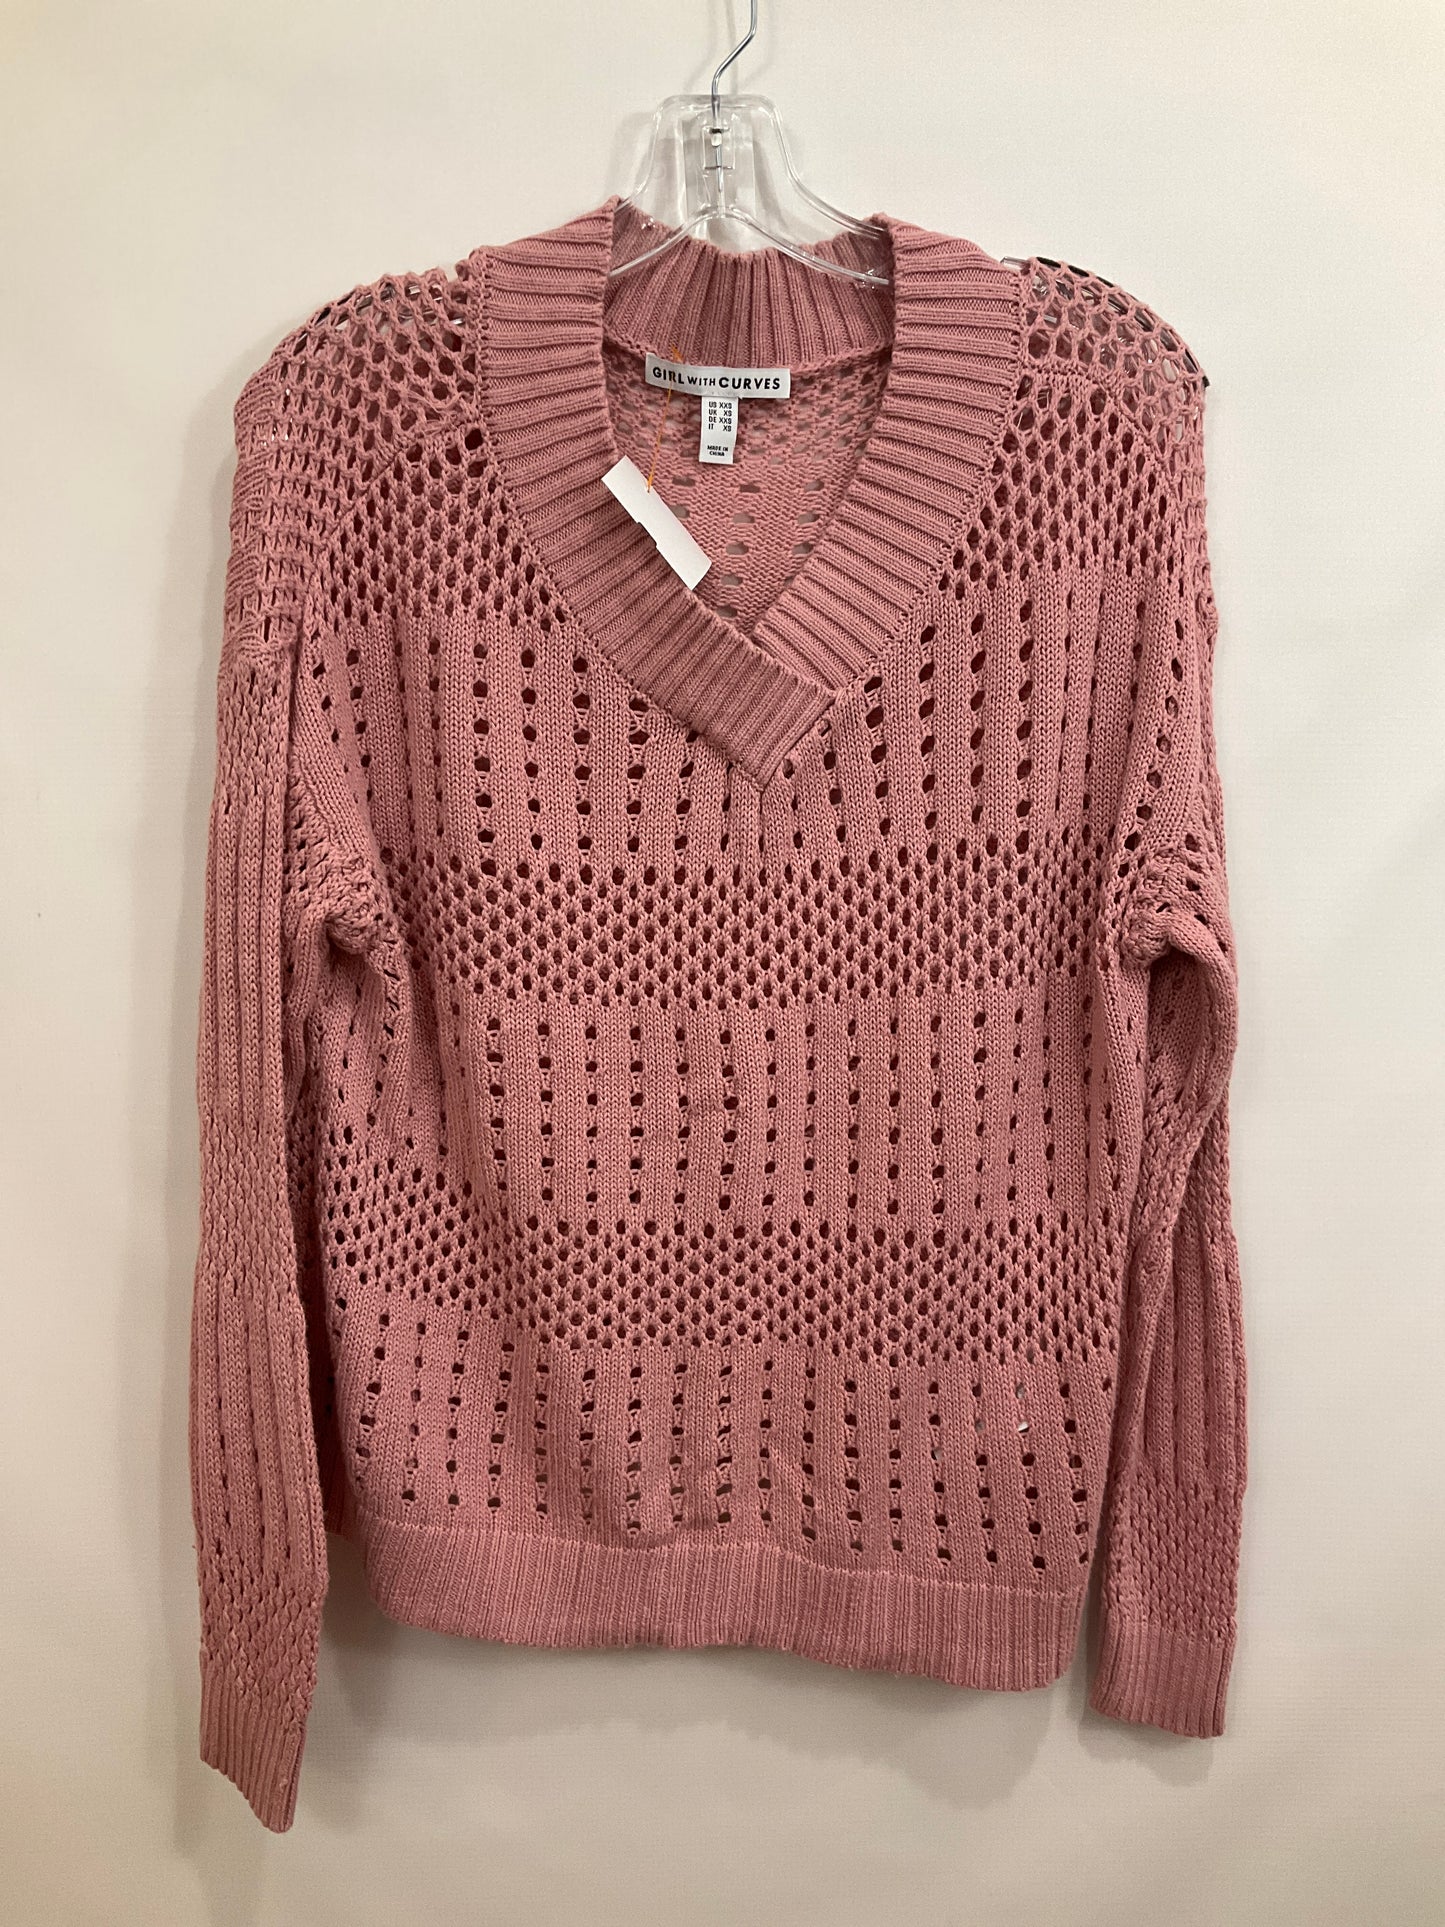 Sweater By Cme  Size: Xxs